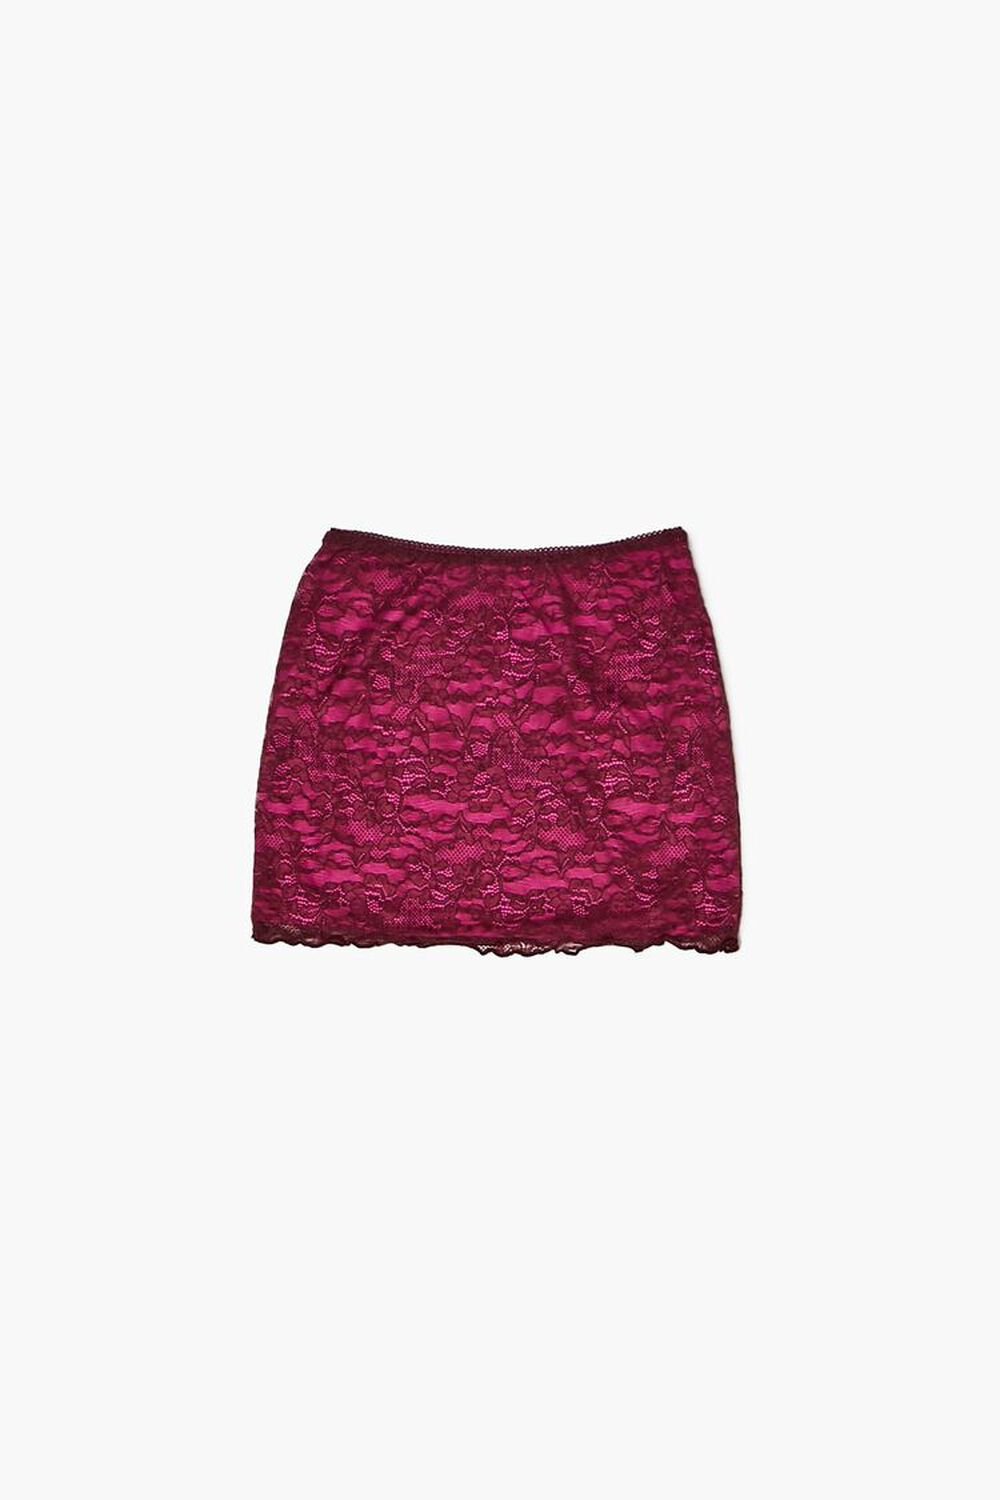 MERLOT/AZALEA Girls Lace Skirt (Kids), image 1